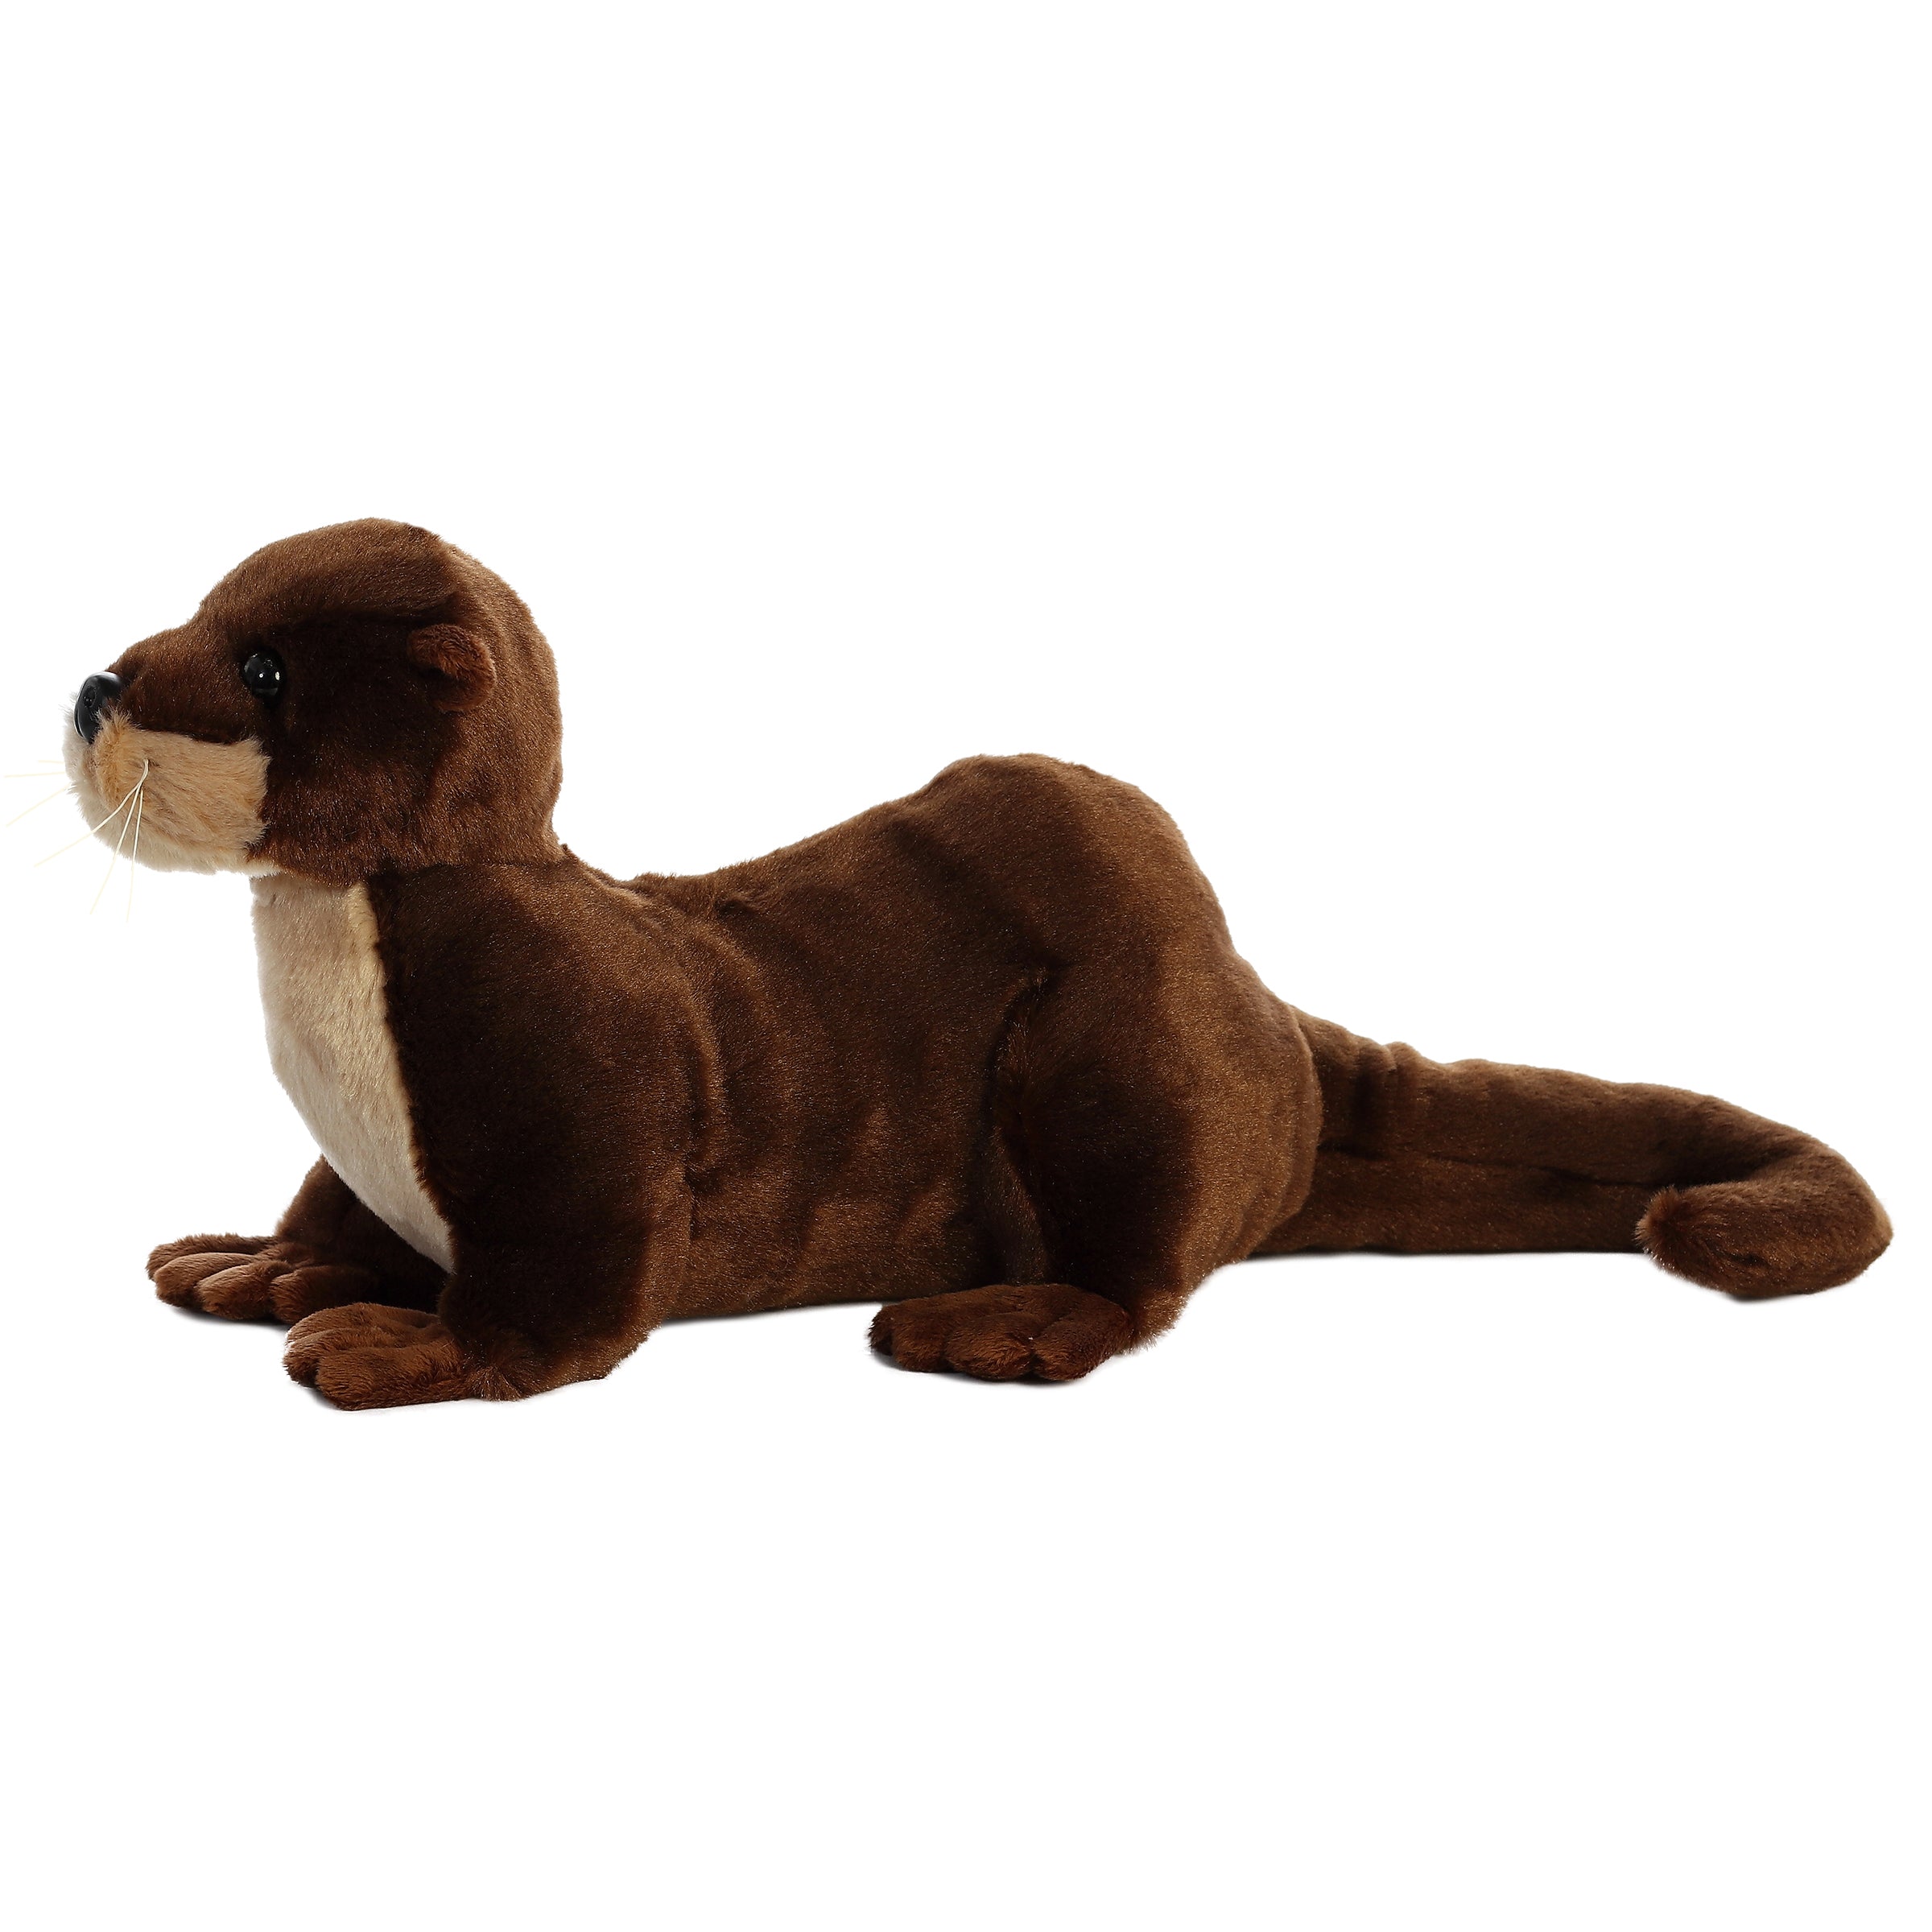 Realistic Stuffed Sea Otter - 10 Inch, Aurora